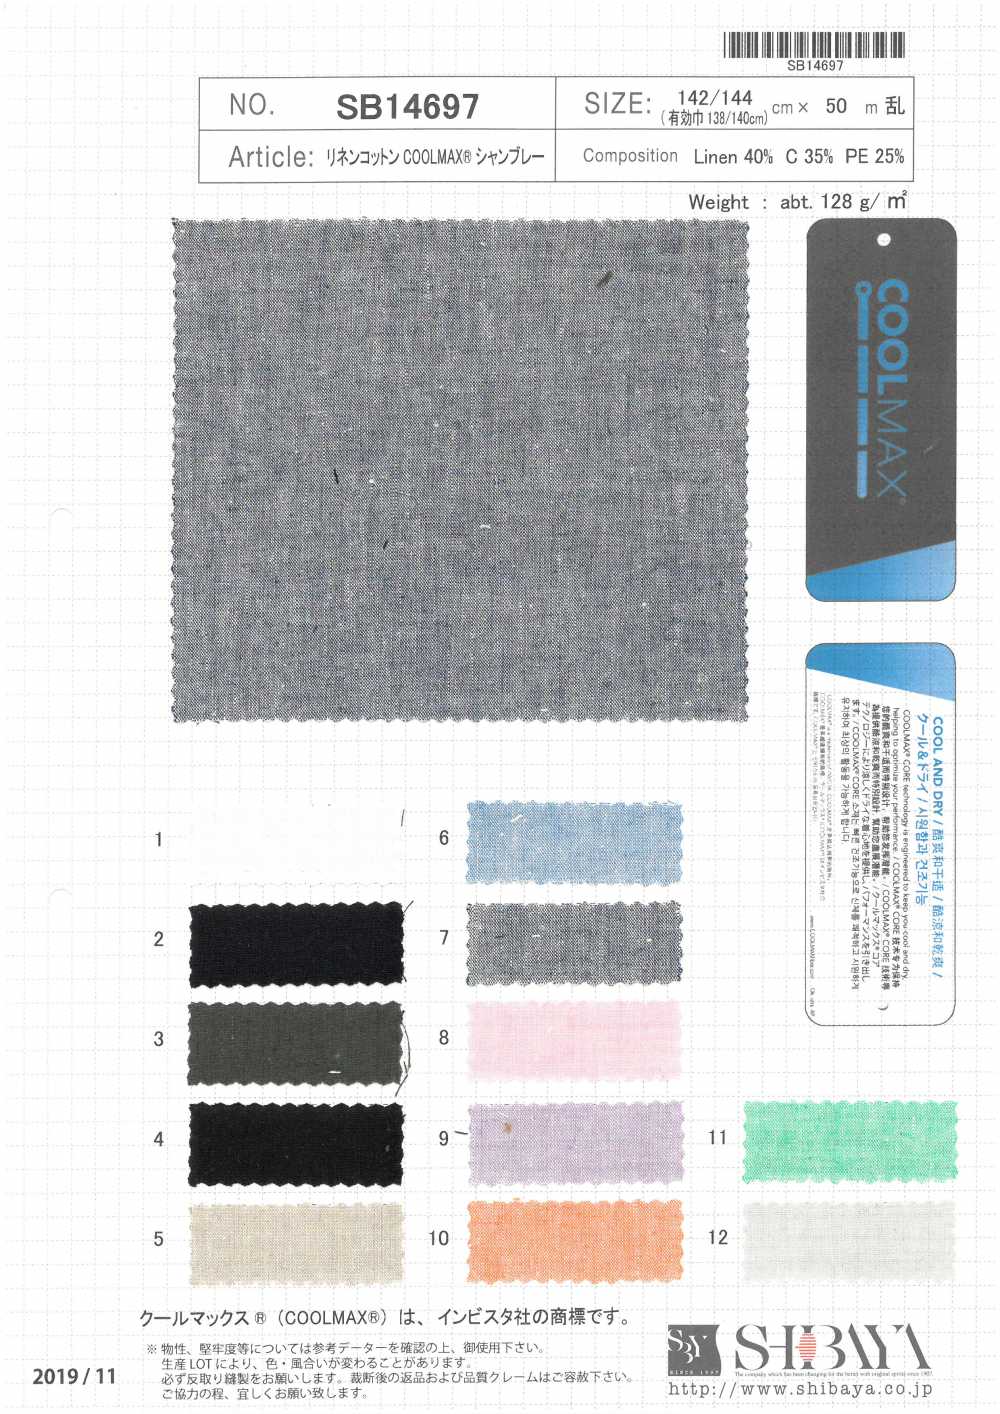 SB14697 Lin / Coton / Chambray COOLMAX®[Fabrication De Textile] SHIBAYA